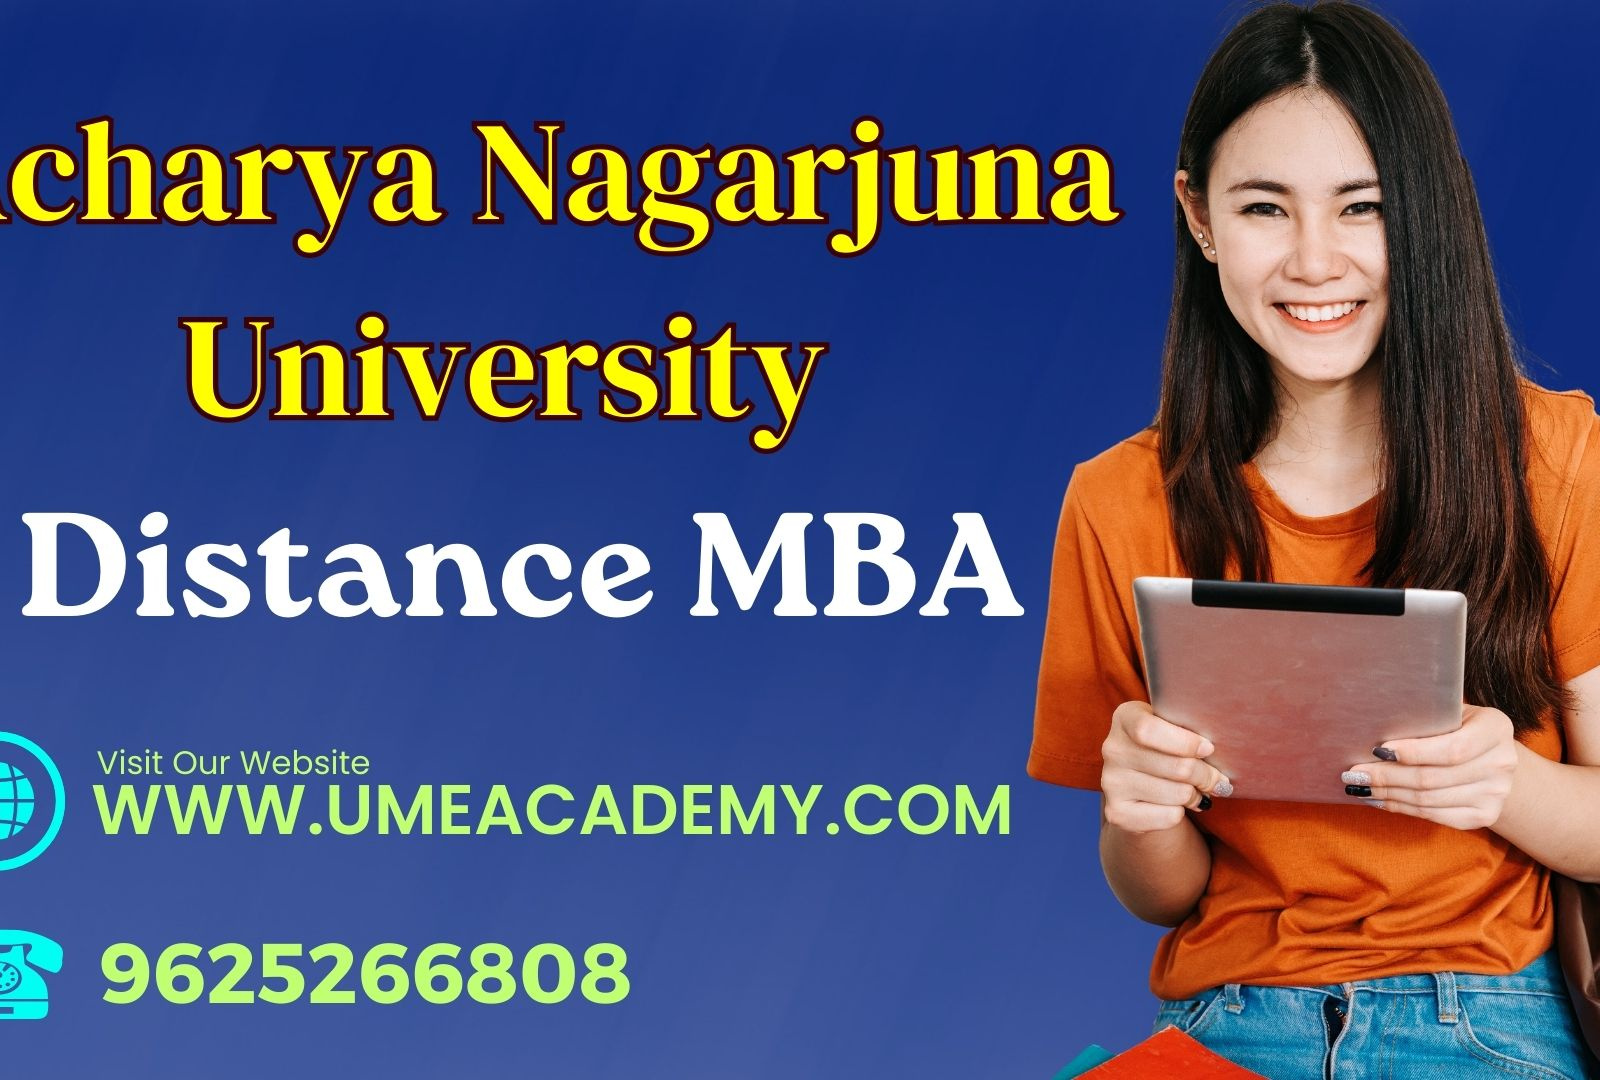 Acharya Nagarjuna University Distance MBA by kajal sharma on Dribbble